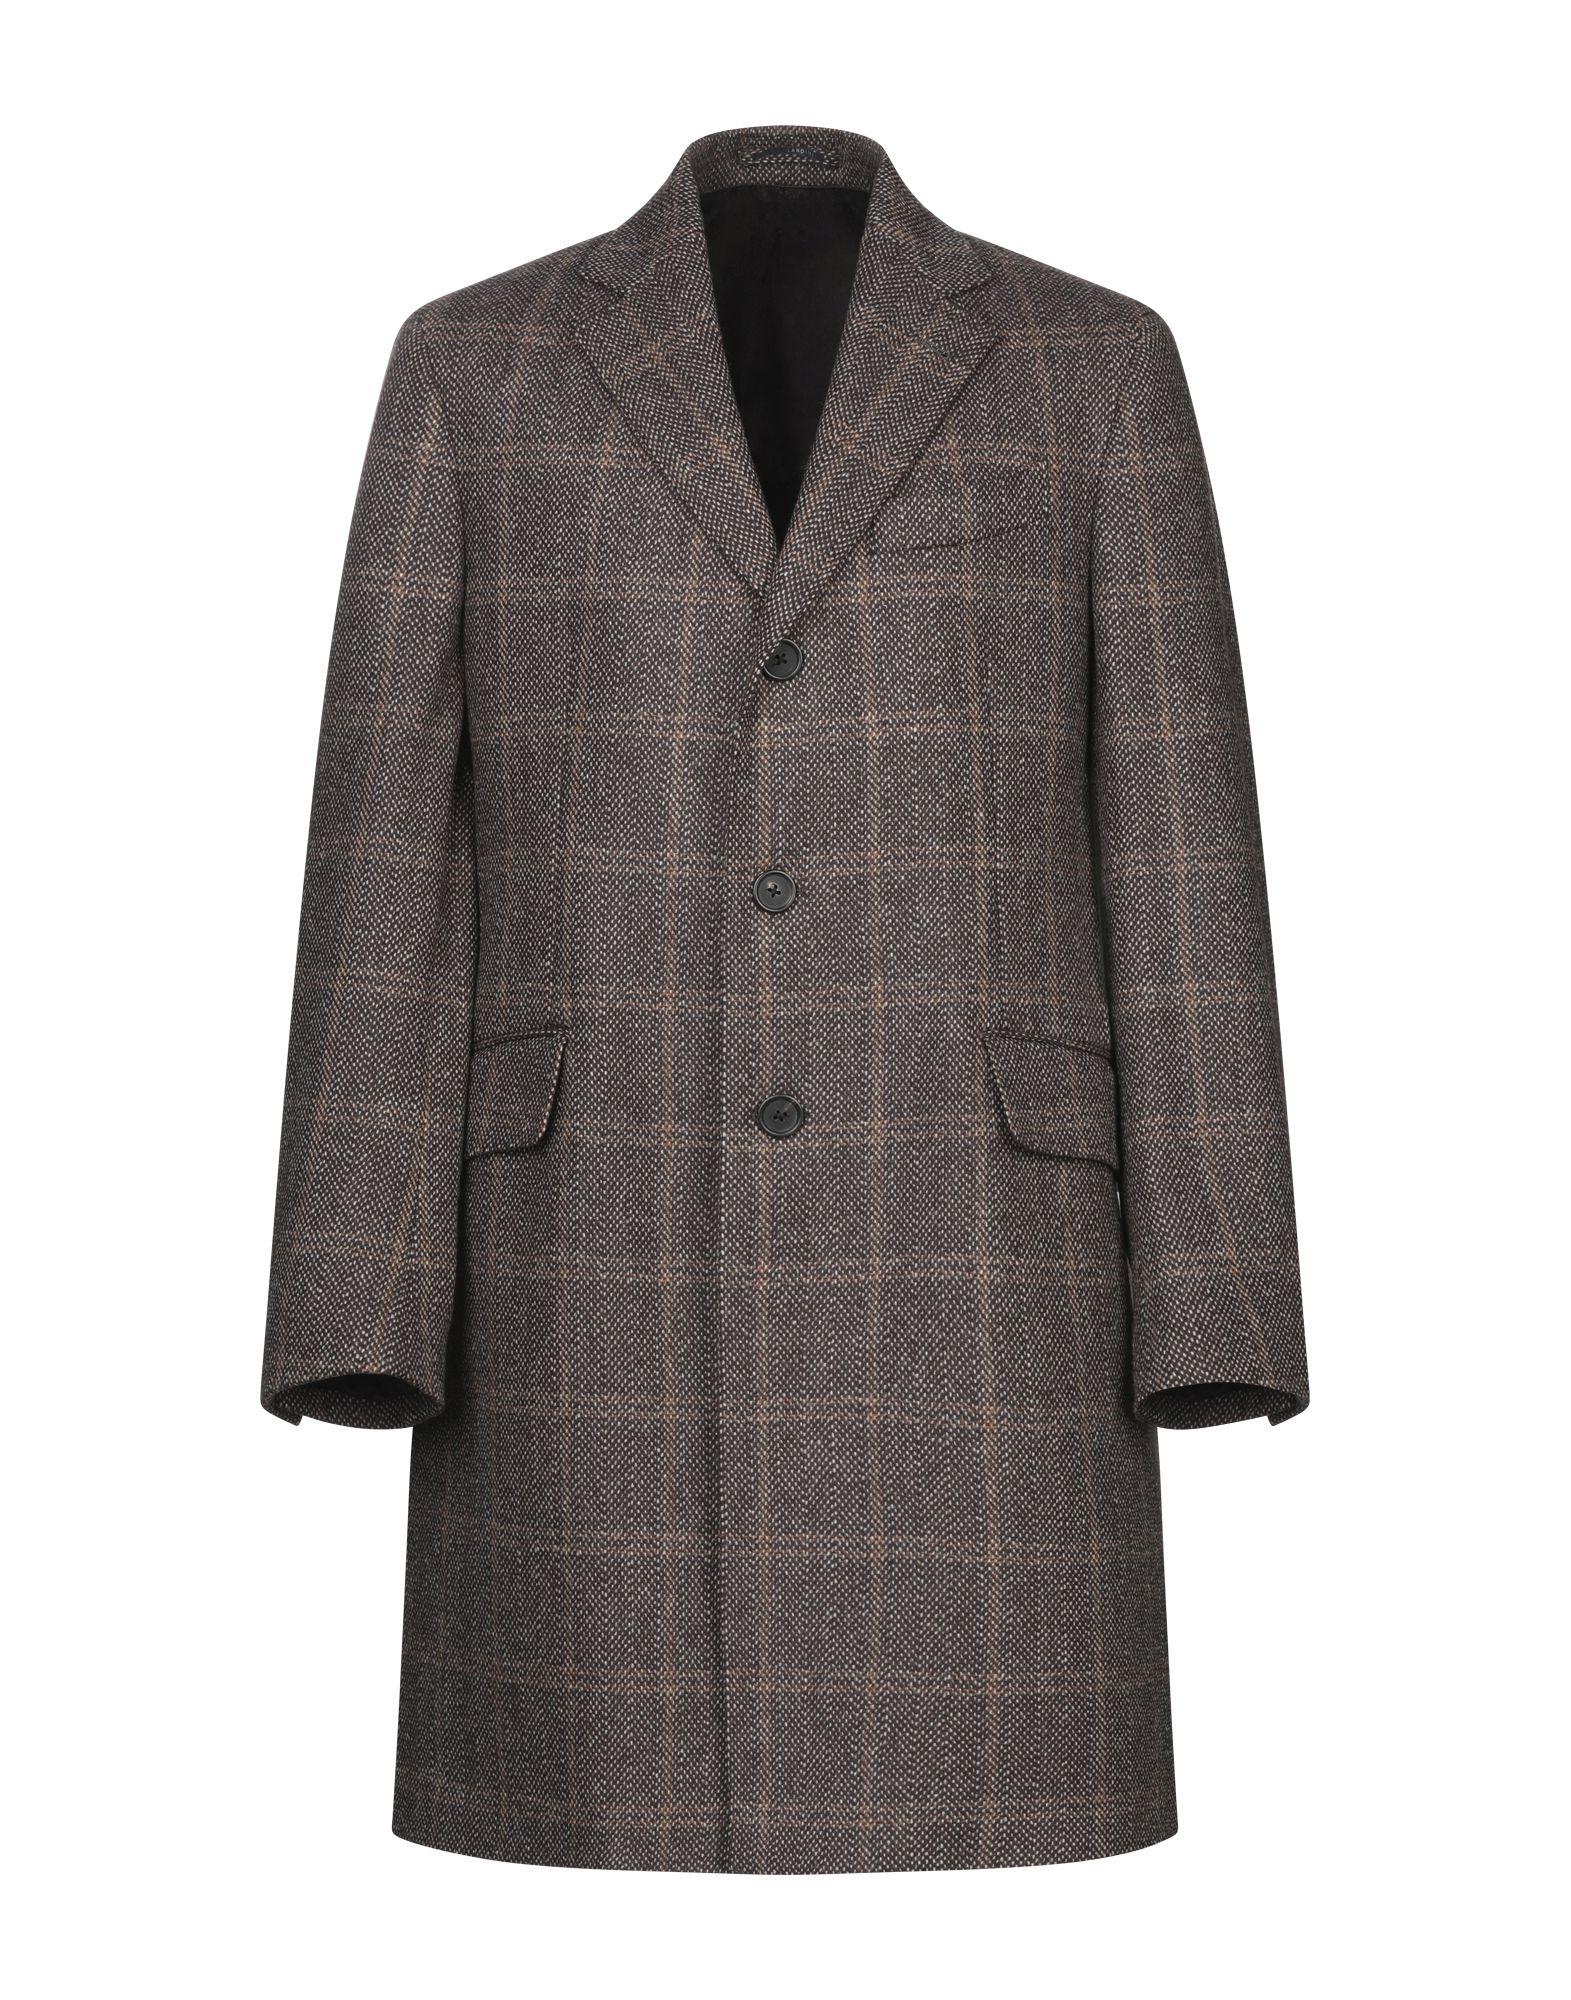 Lardini Flannel Coat in Dark Brown (Brown) for Men - Lyst